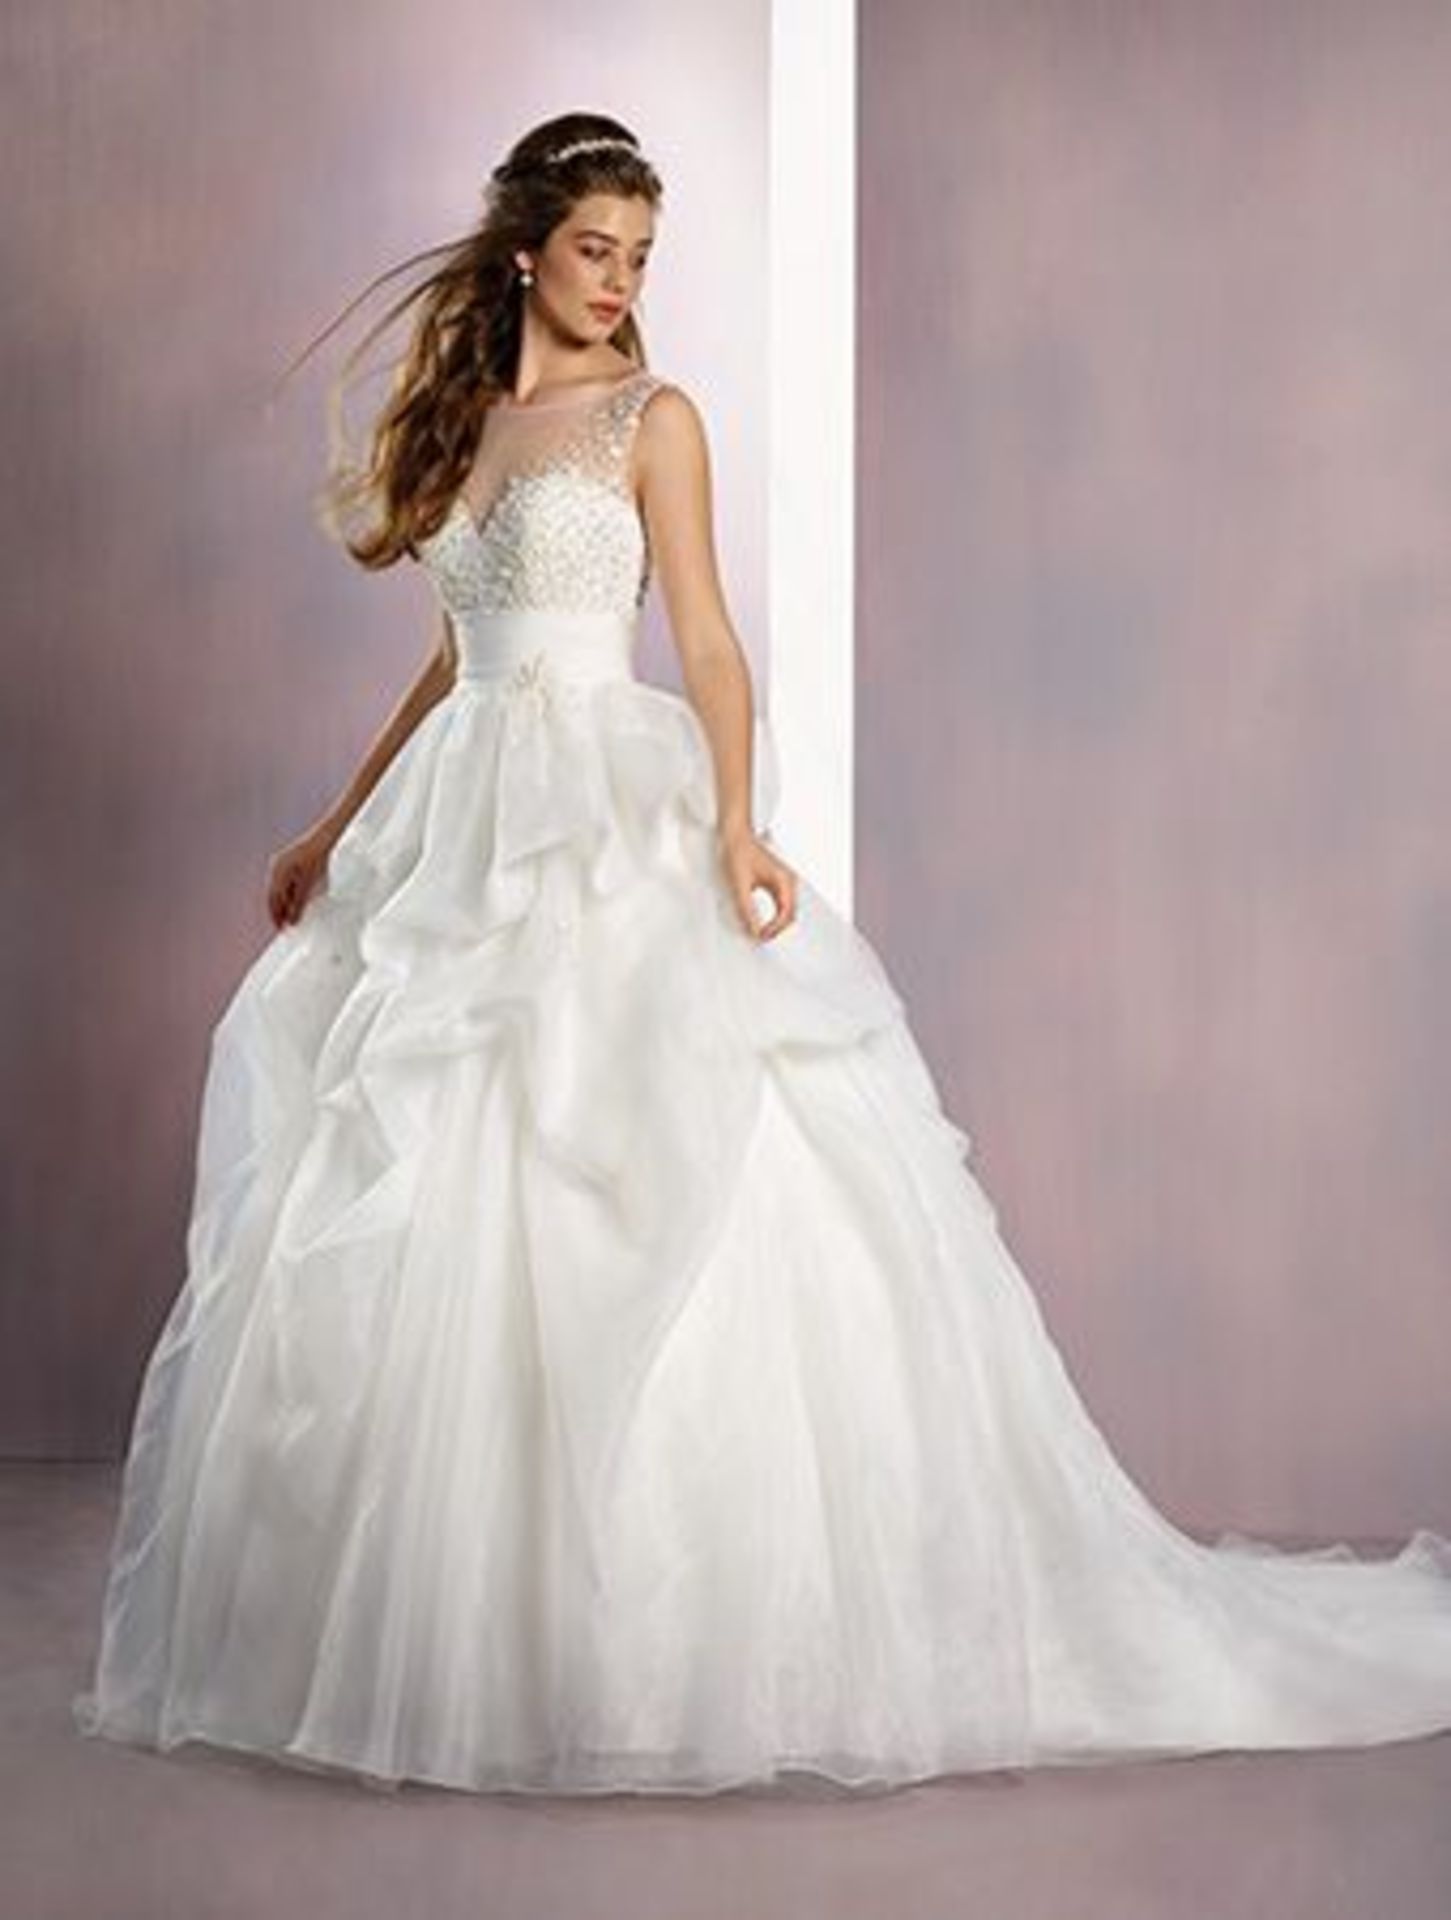 80 x Various Ex-Display Wedding Dresses - Brands inc: LadyBird, White Rose & Lillian West - Image 9 of 60